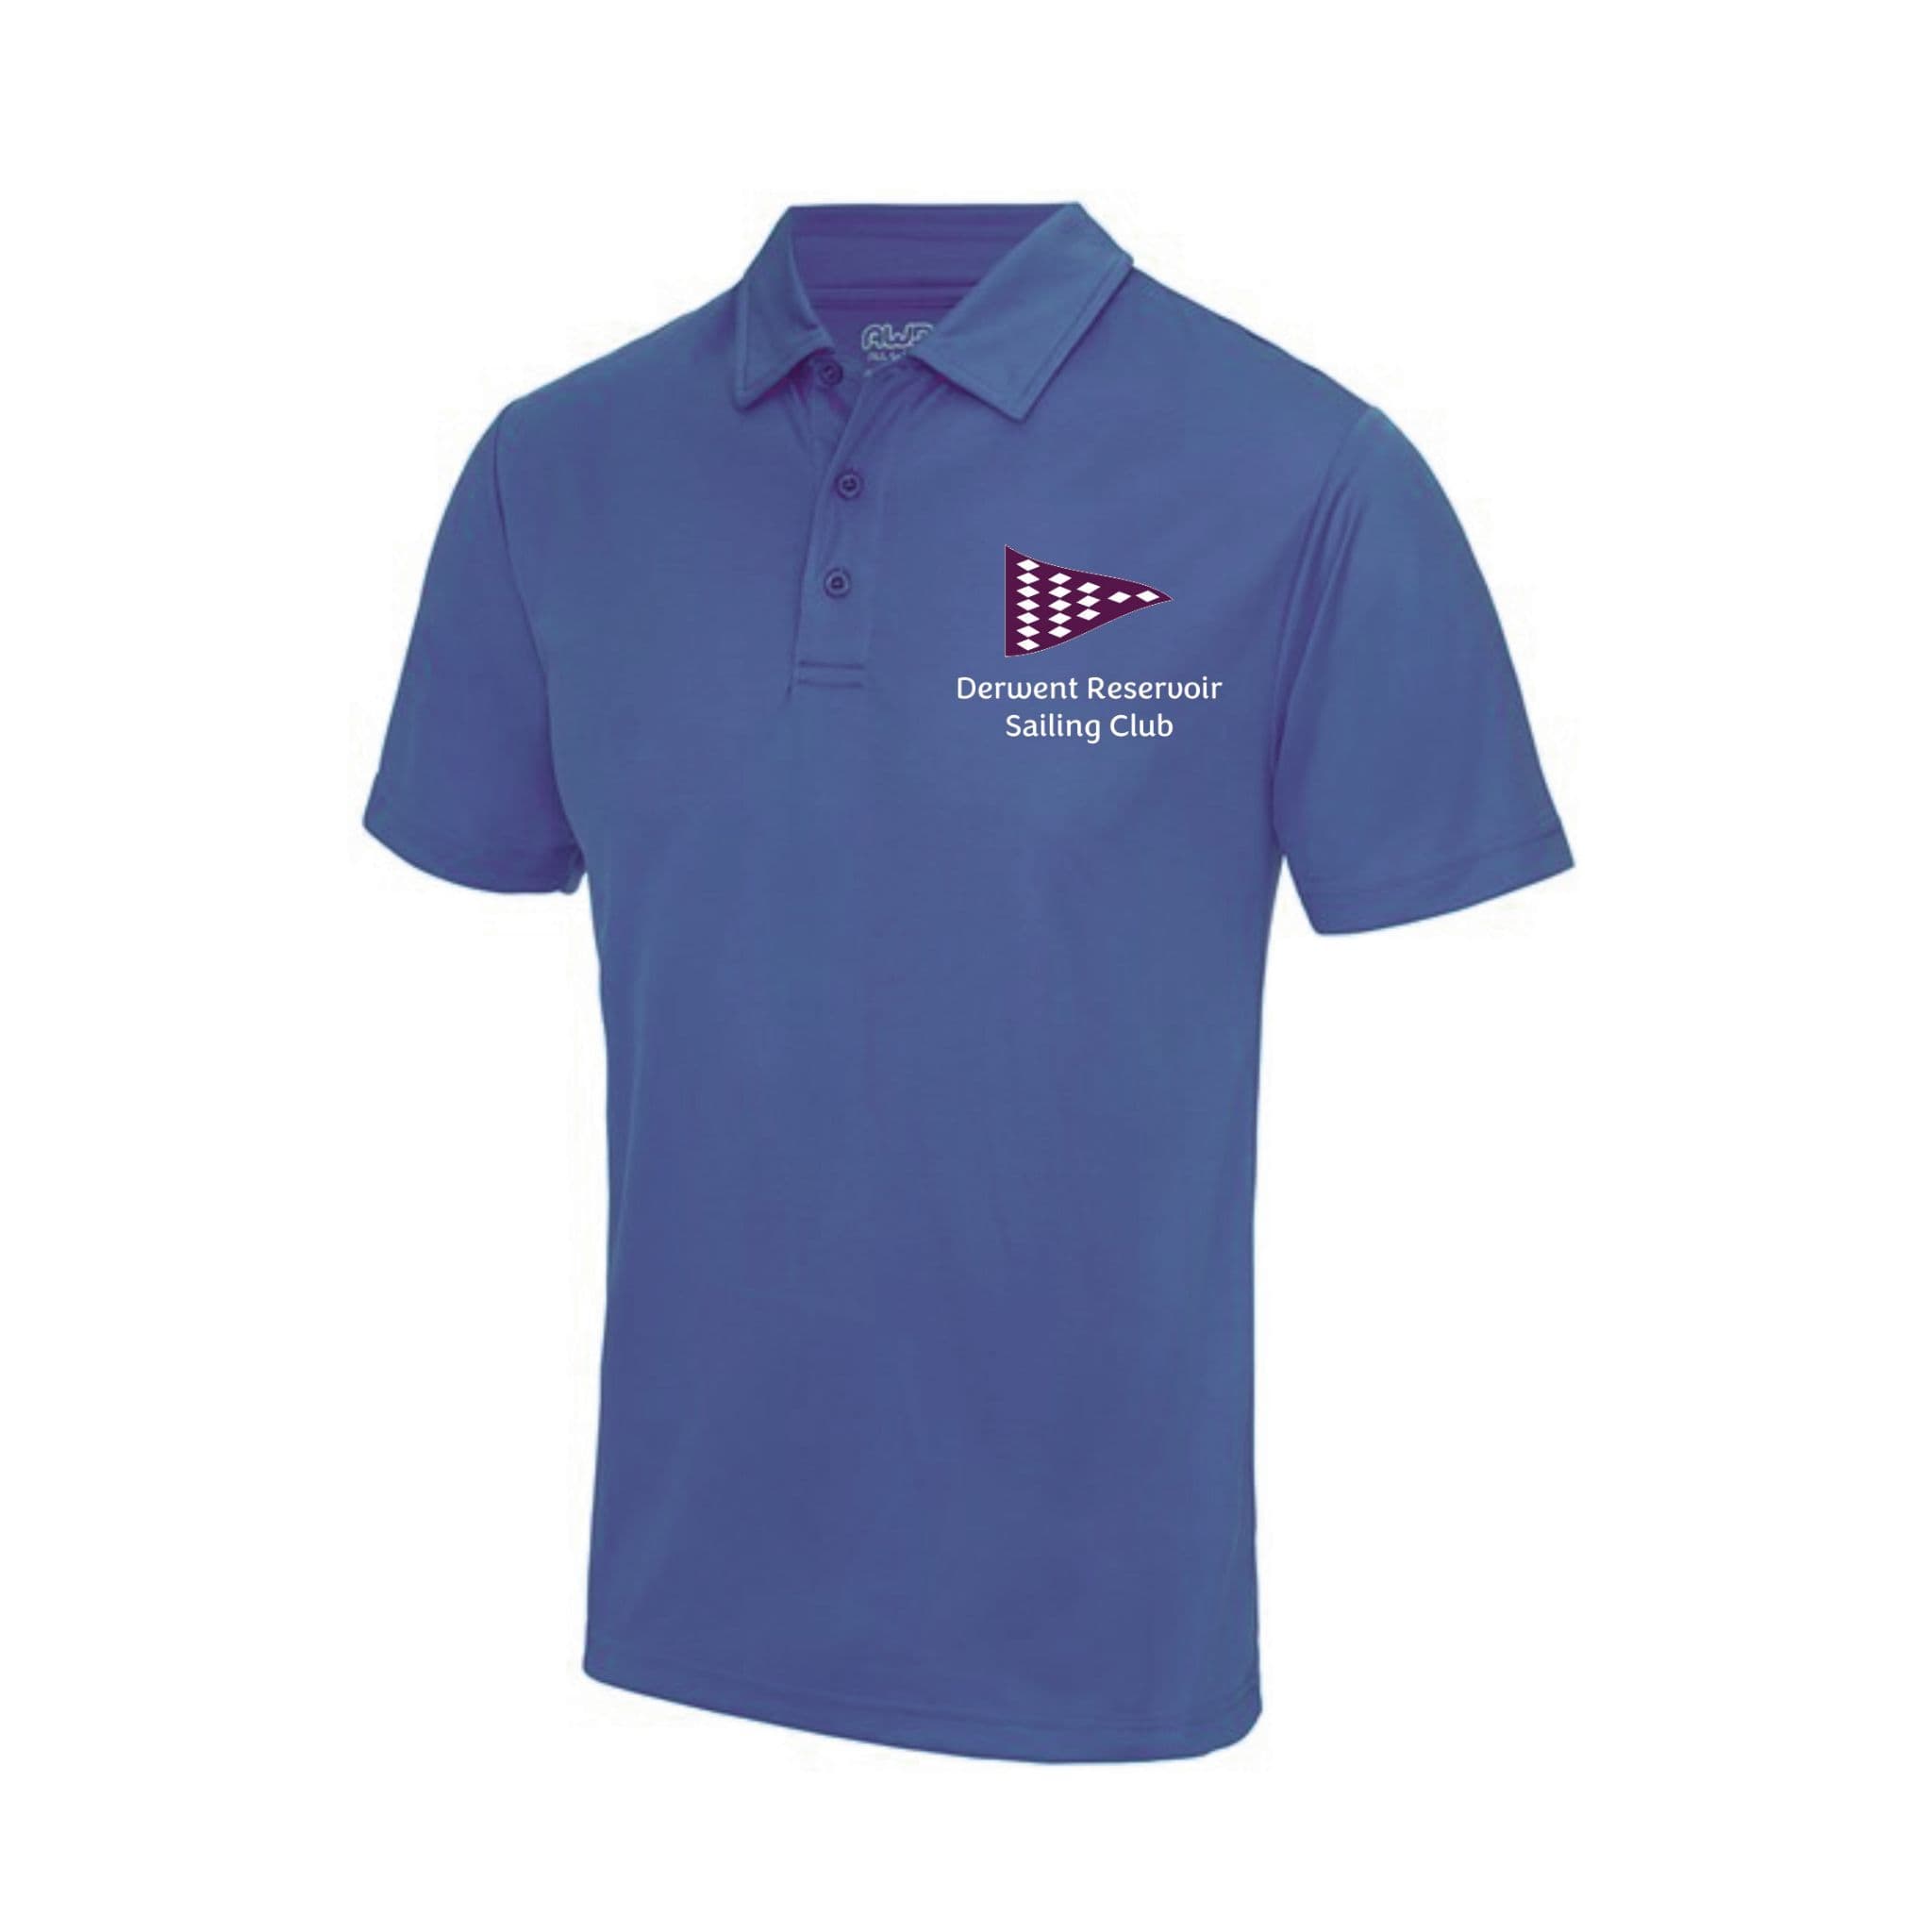 Derwent Reservoir Sailing Club Ladies Sapphire Polo Shirt JC045